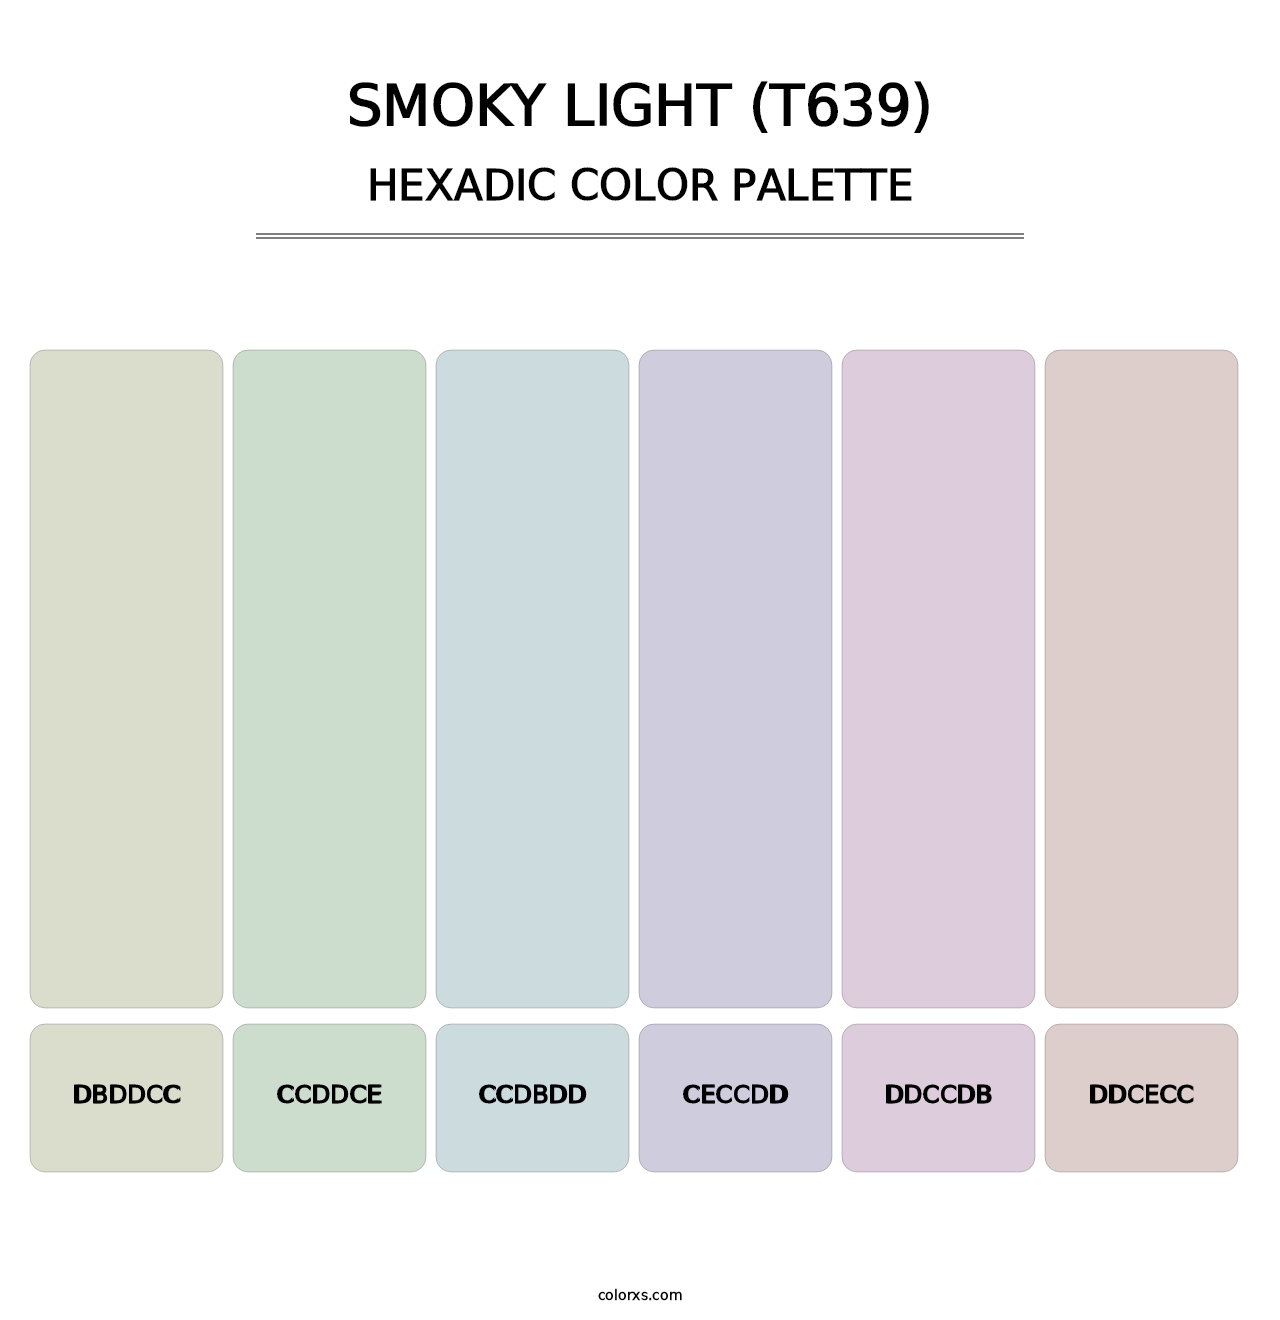 Smoky Light (T639) - Hexadic Color Palette